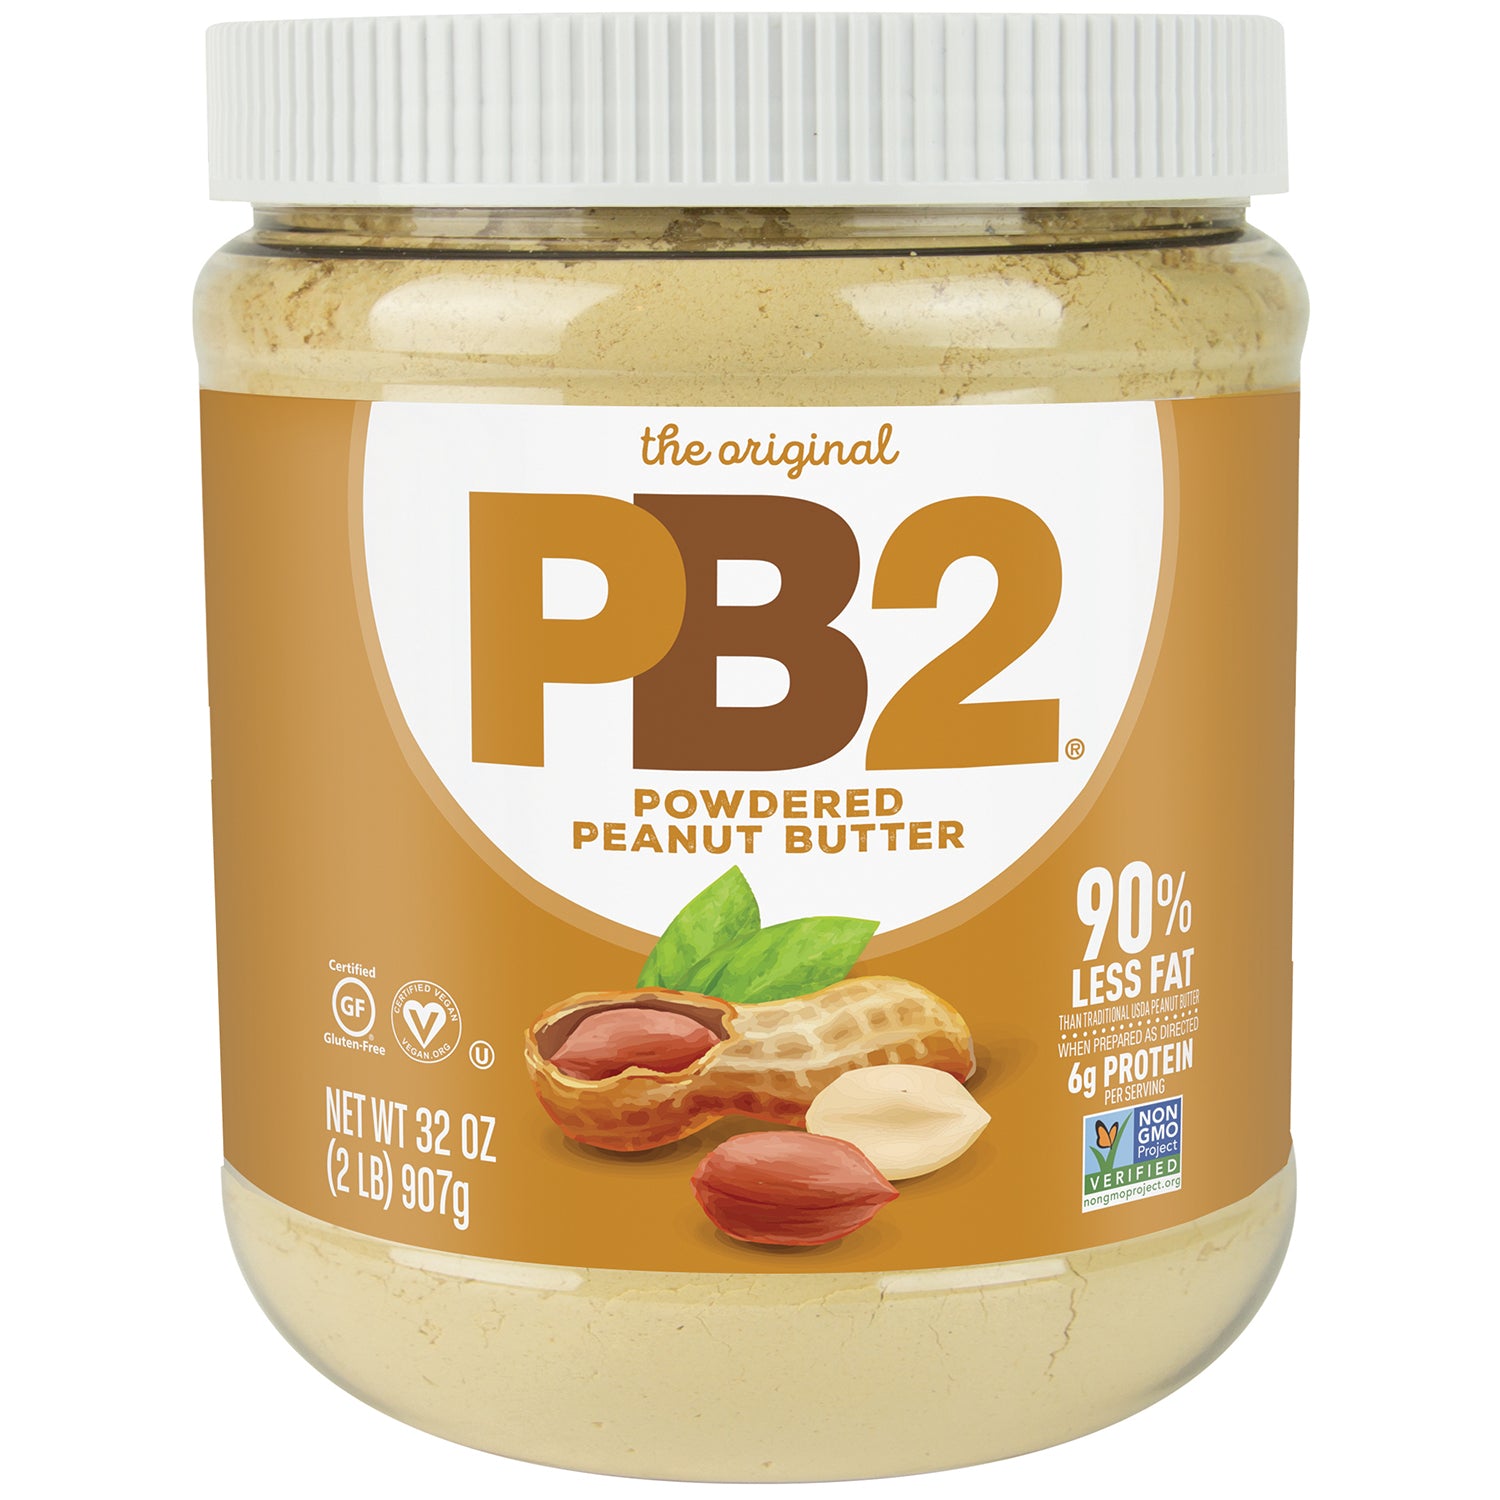 PPB Powdered Peanut Butter Original